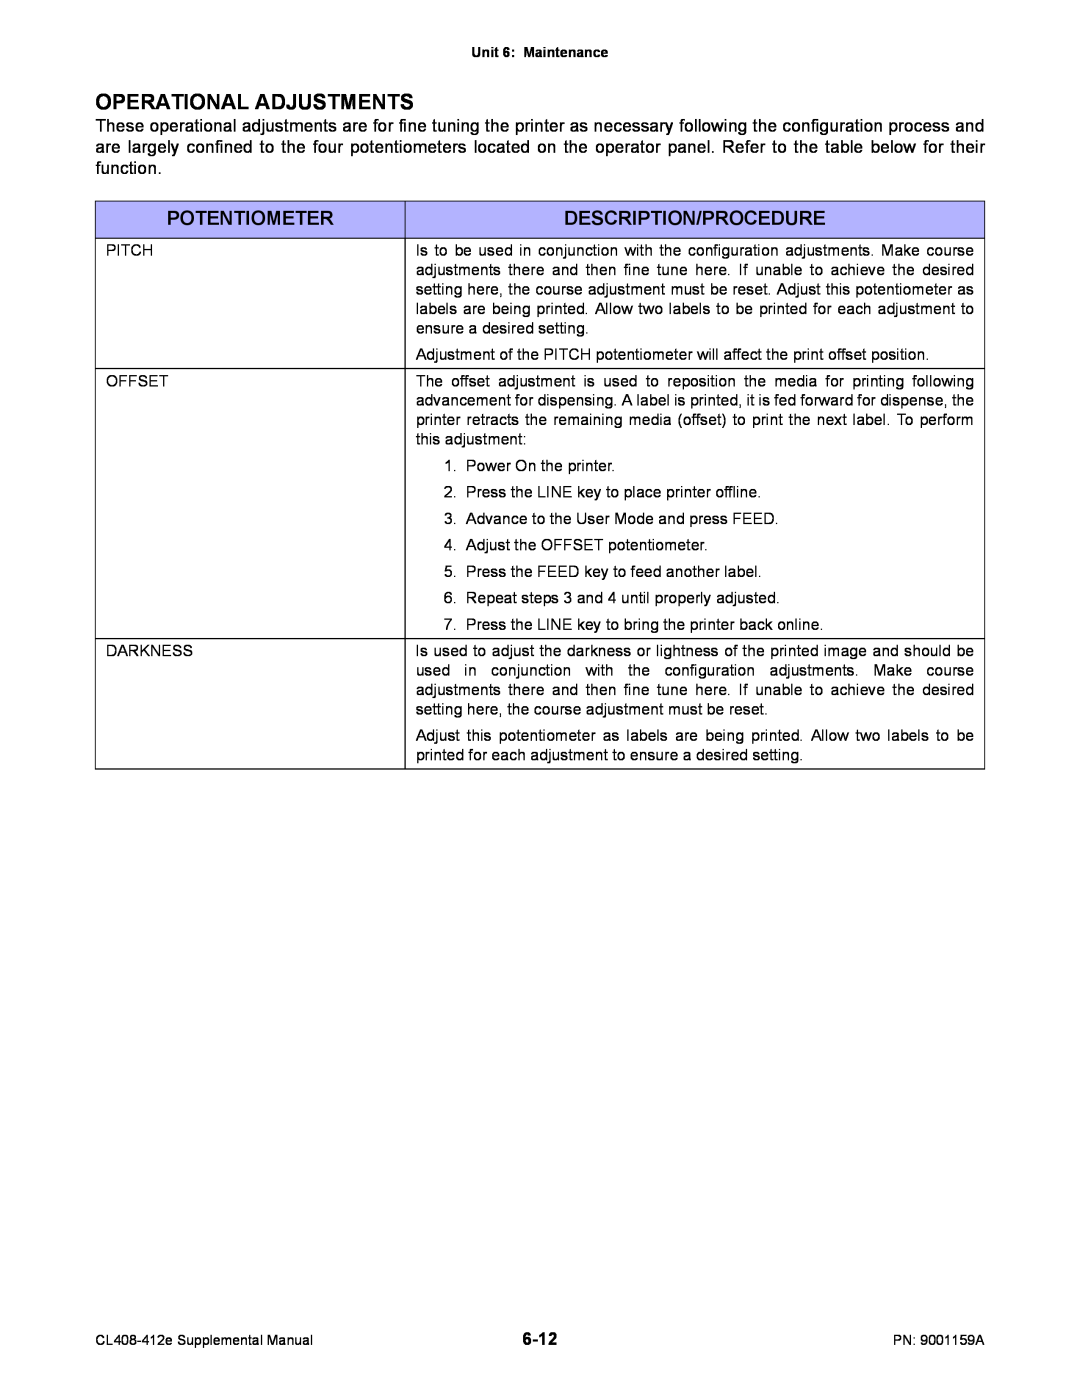 SATO CL408-412e manual Operational Adjustments, Potentiometer, Description/Procedure 